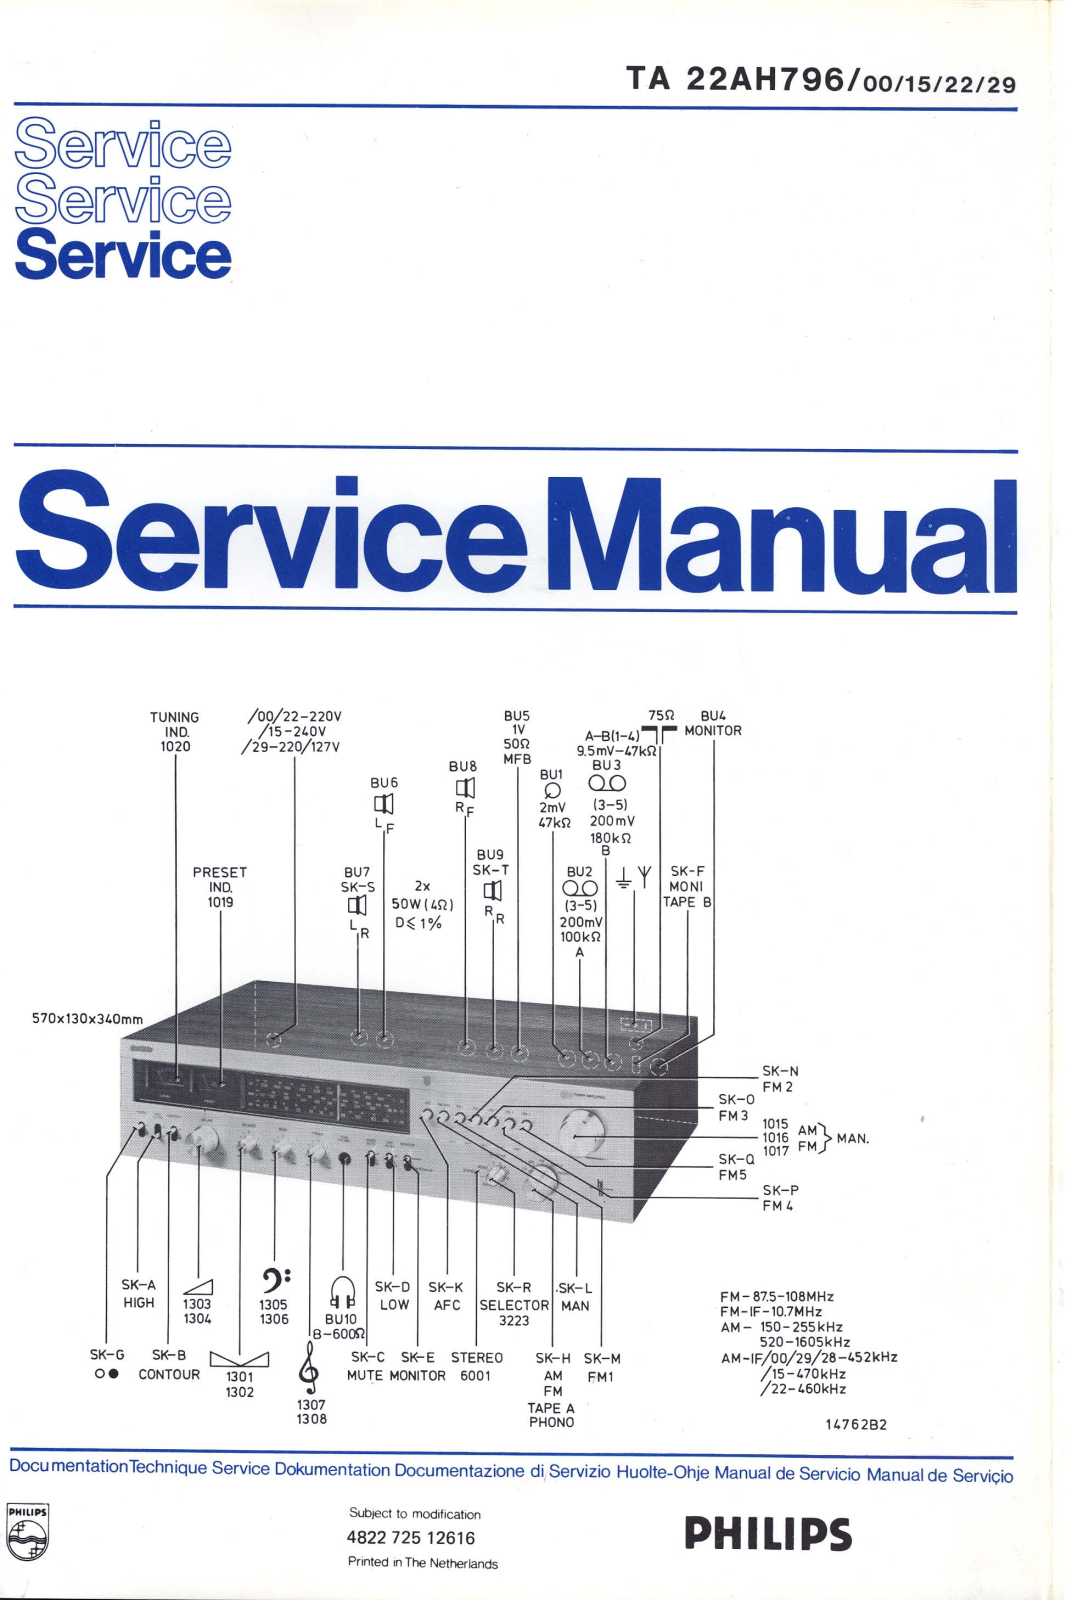 Philips 22-AH-796 Service Manual